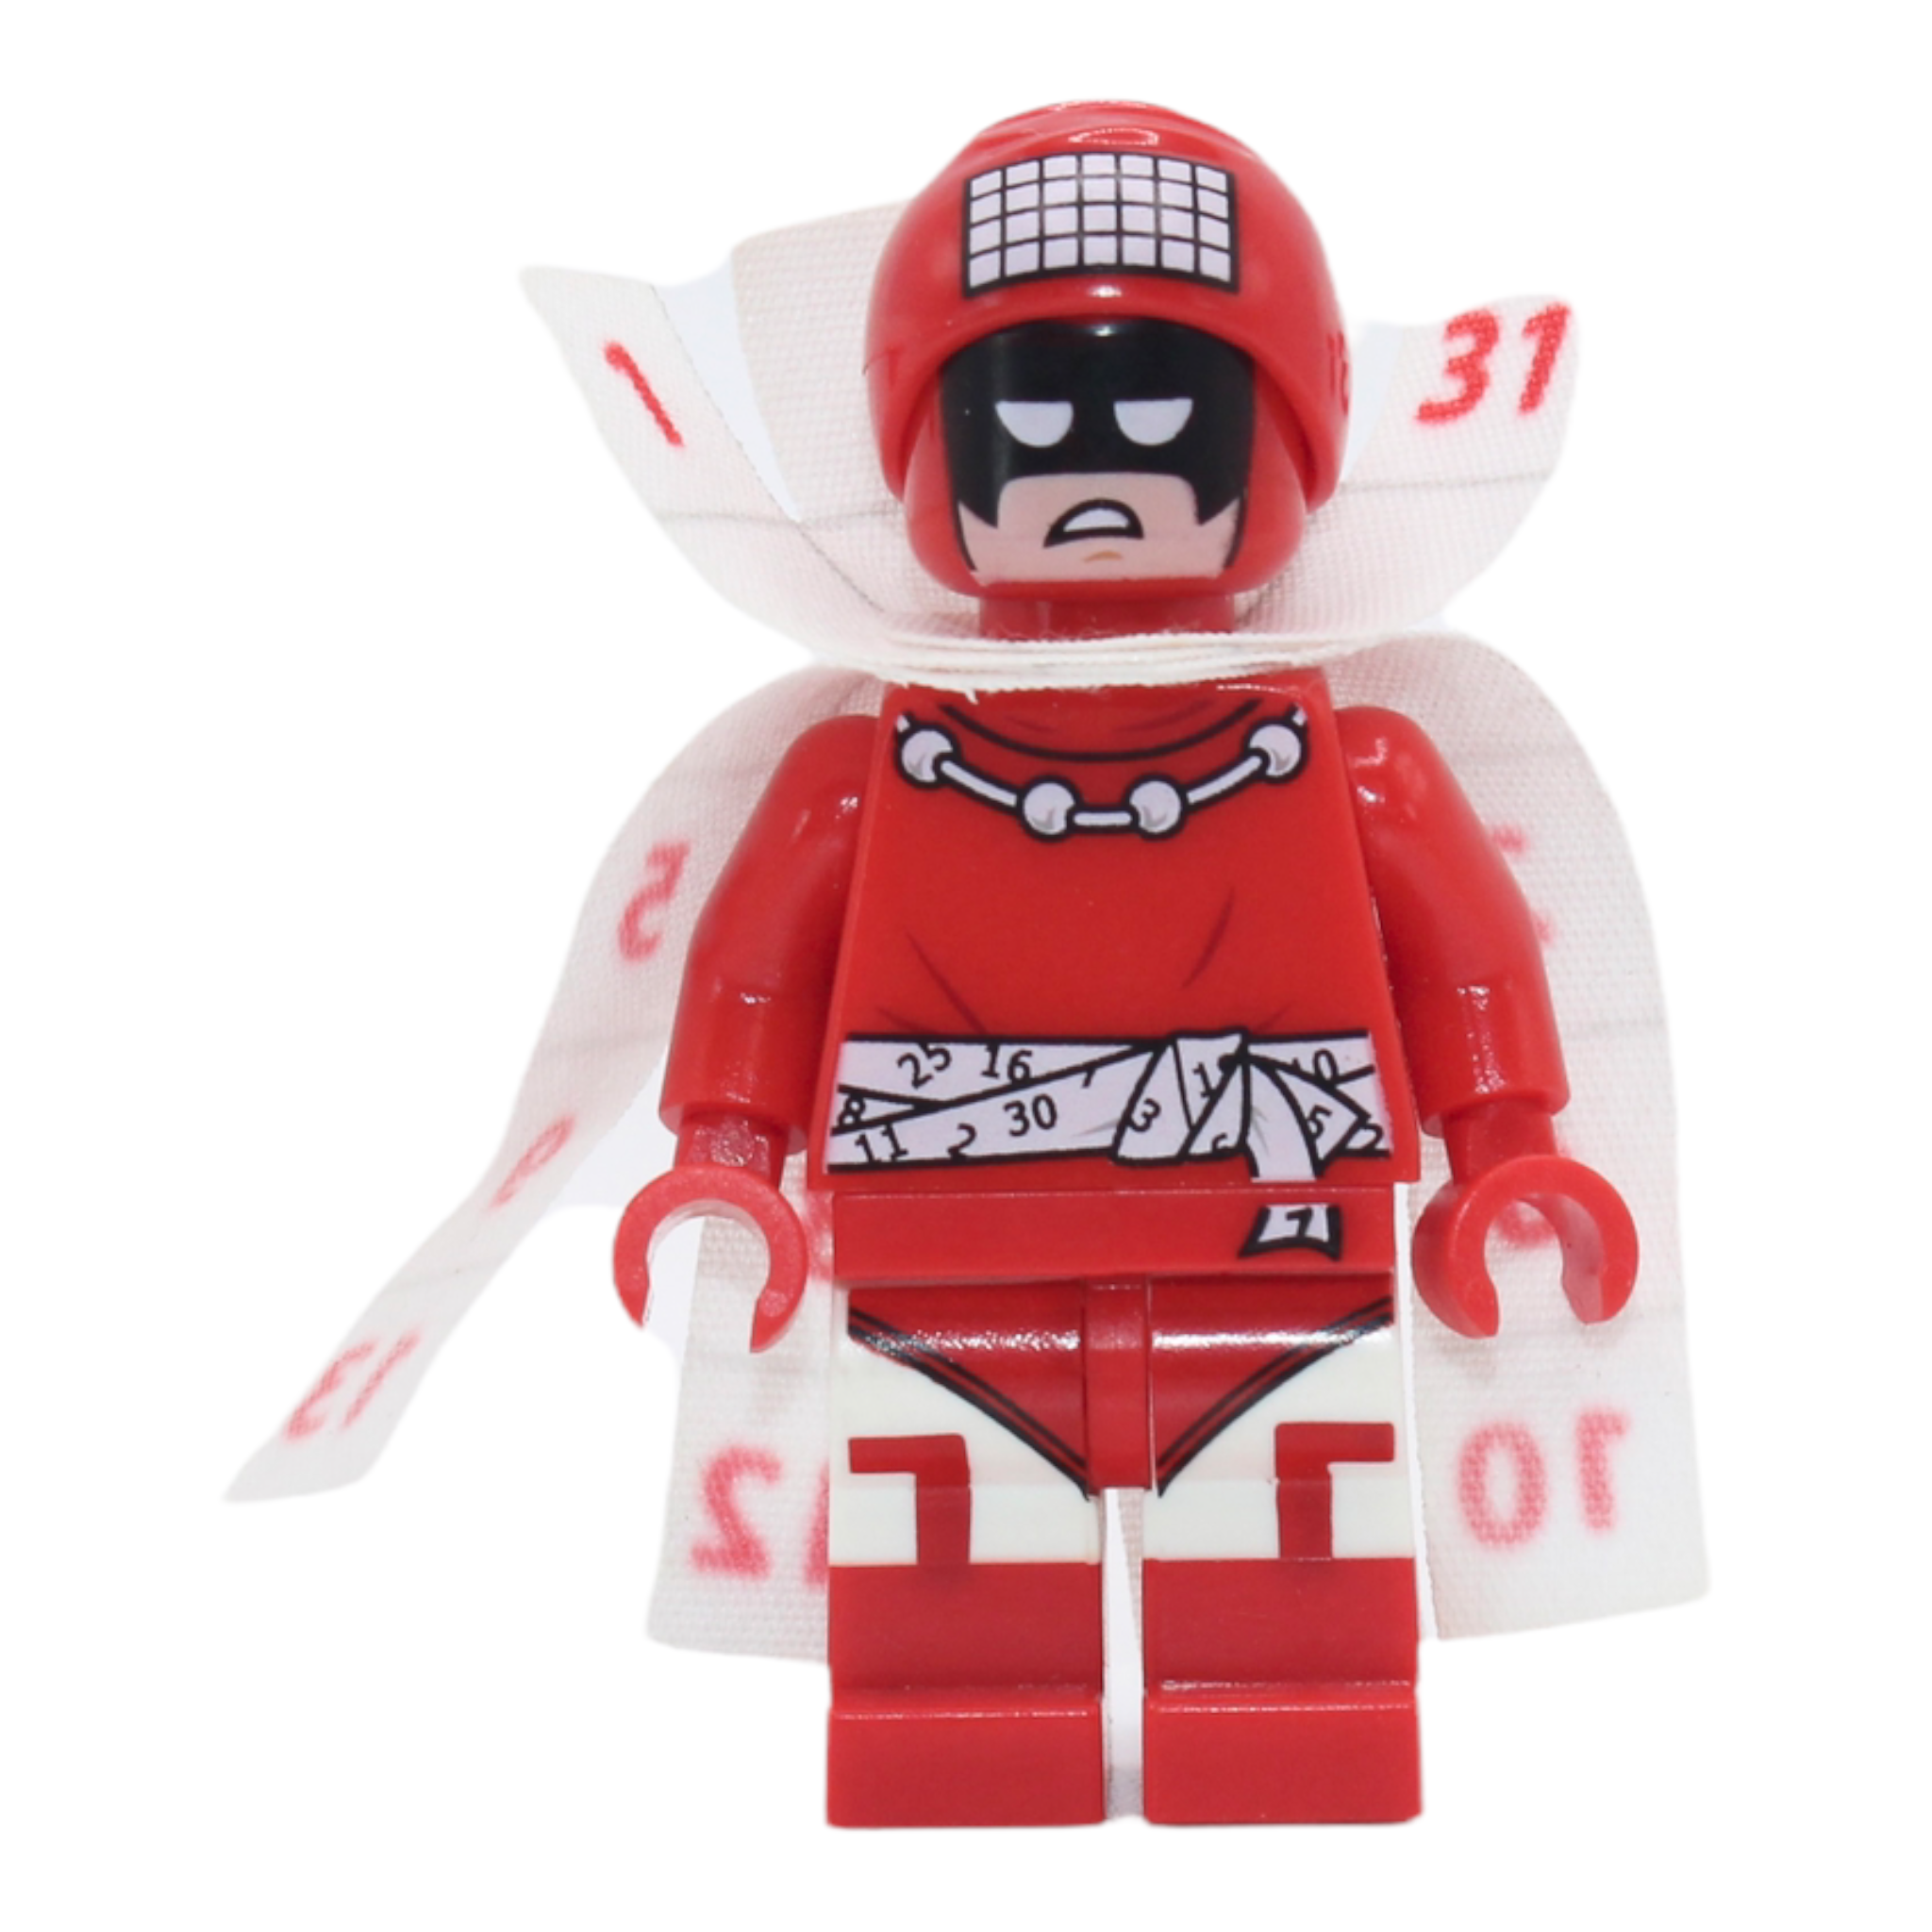 Calendar Man (The LEGO Batman Movie)